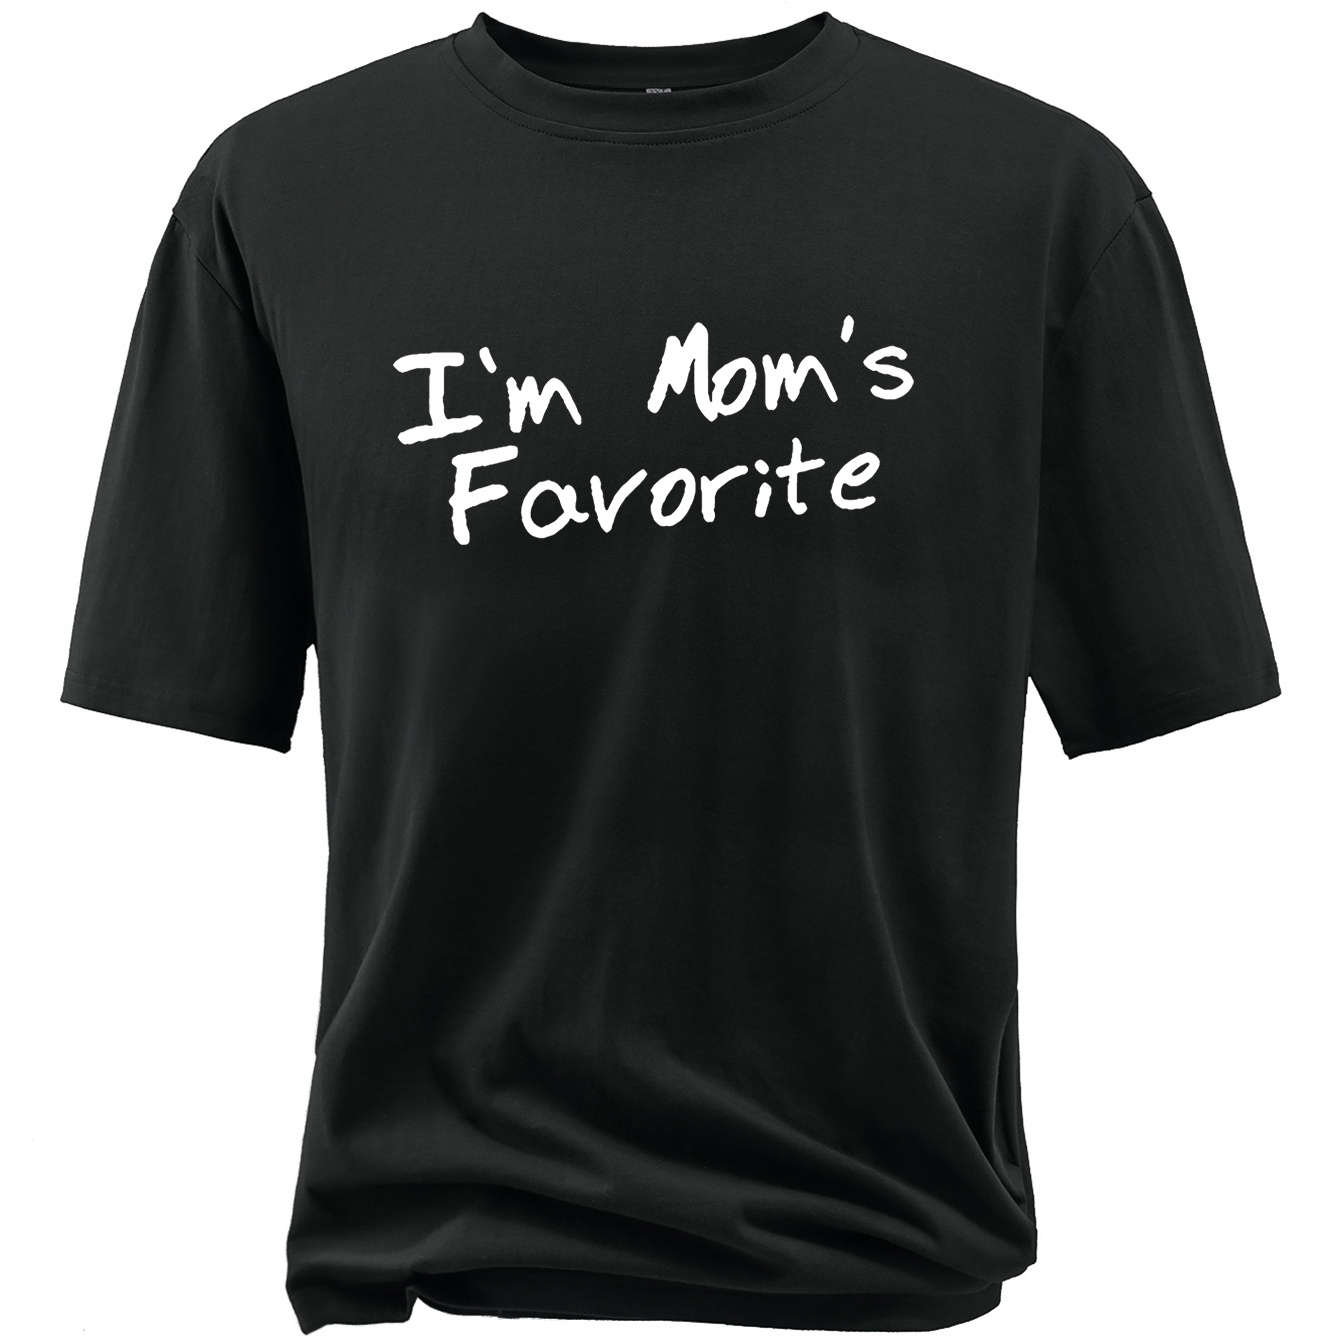 

Plus Size Men's Crew Neck T-shirt, Mom's Favorite Print Short Sleeve Sports Tee Tops, Men's Summer Clothing